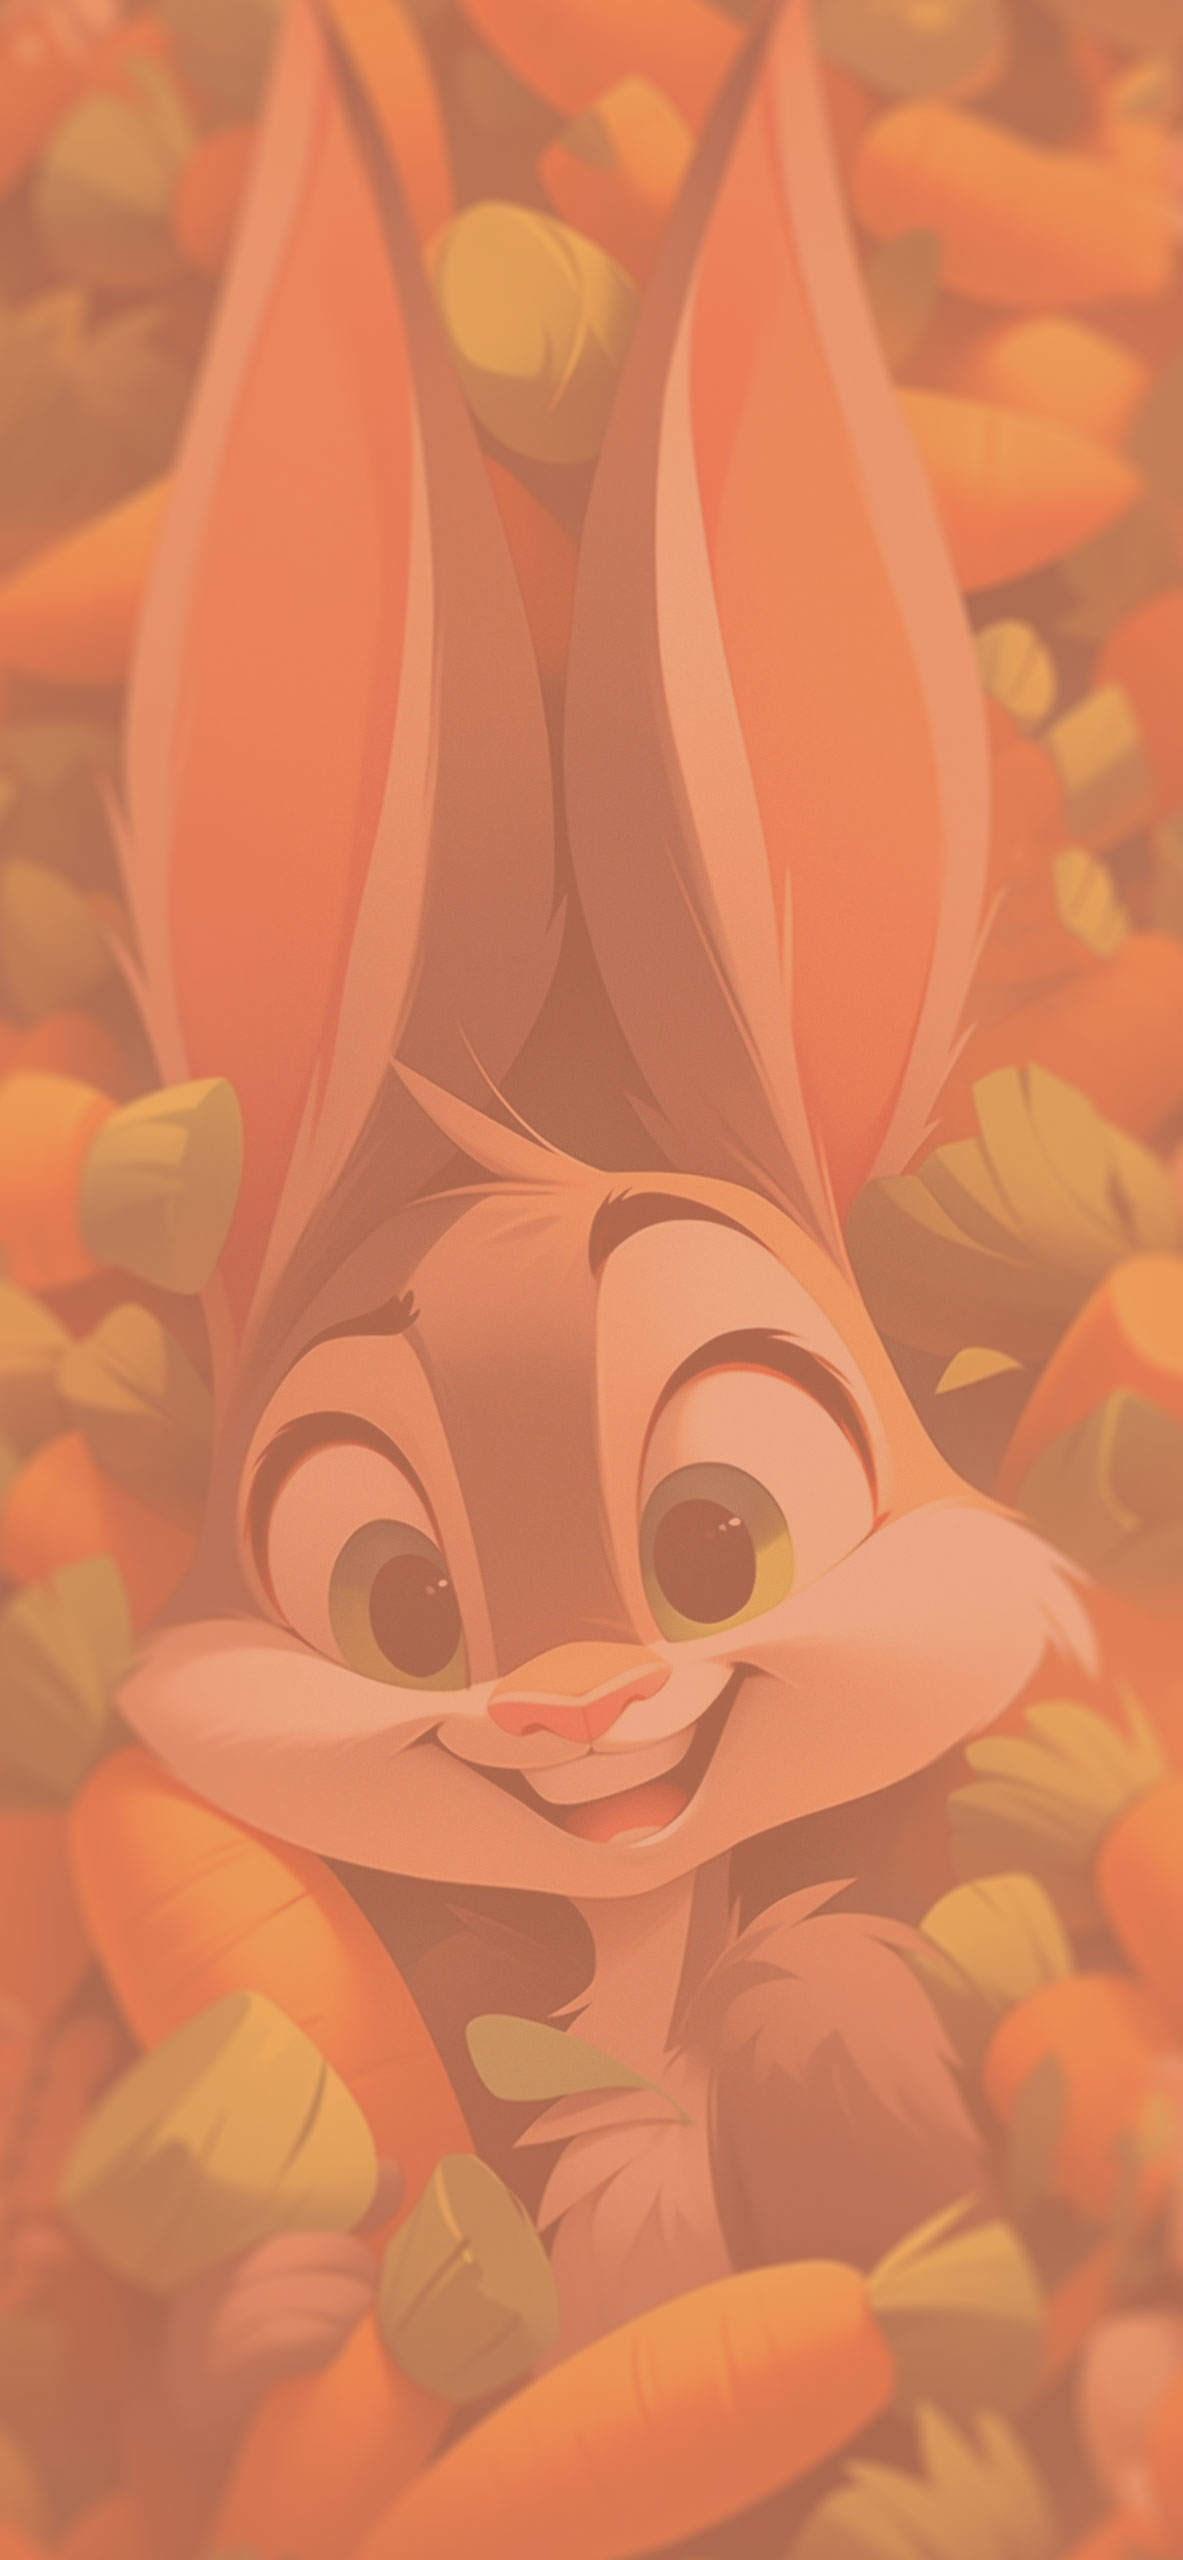 Cute Bunny & Carrots Cartoon Wallpaper Cute Rabbit Wallpaper f